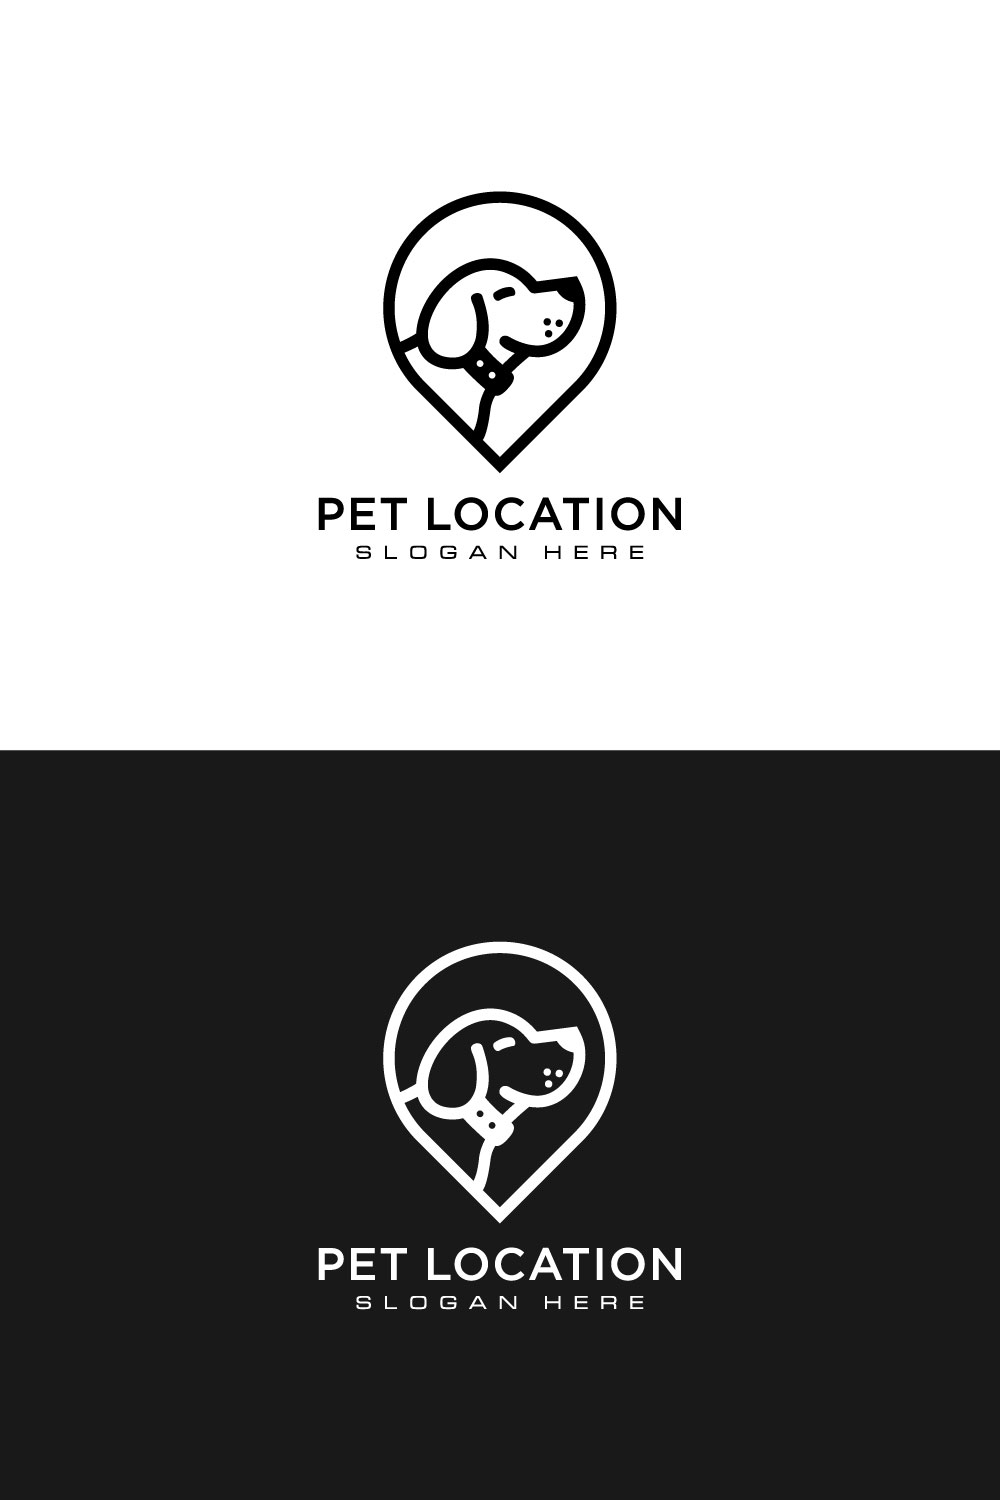 Dog Location Logo Vector Design Pinterest Image.